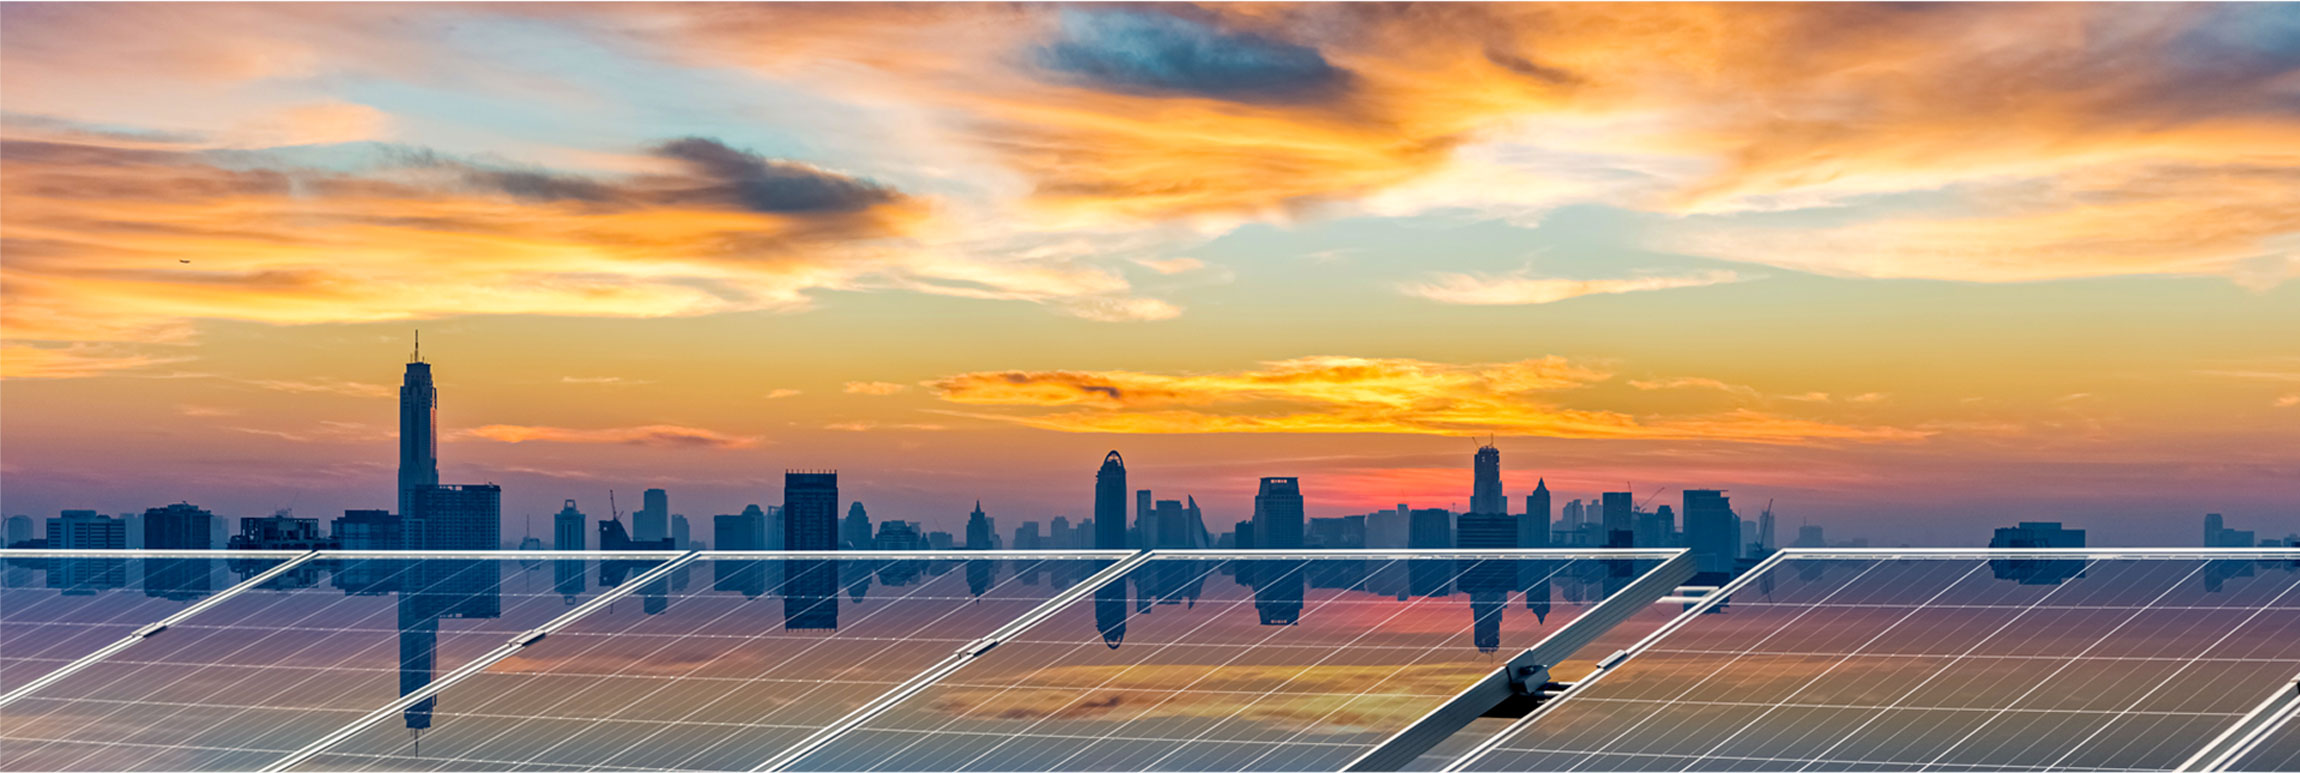 qualità certificata dmt solar impianti fotovoltaici partner tesla, maxeon sunpower, solaredge